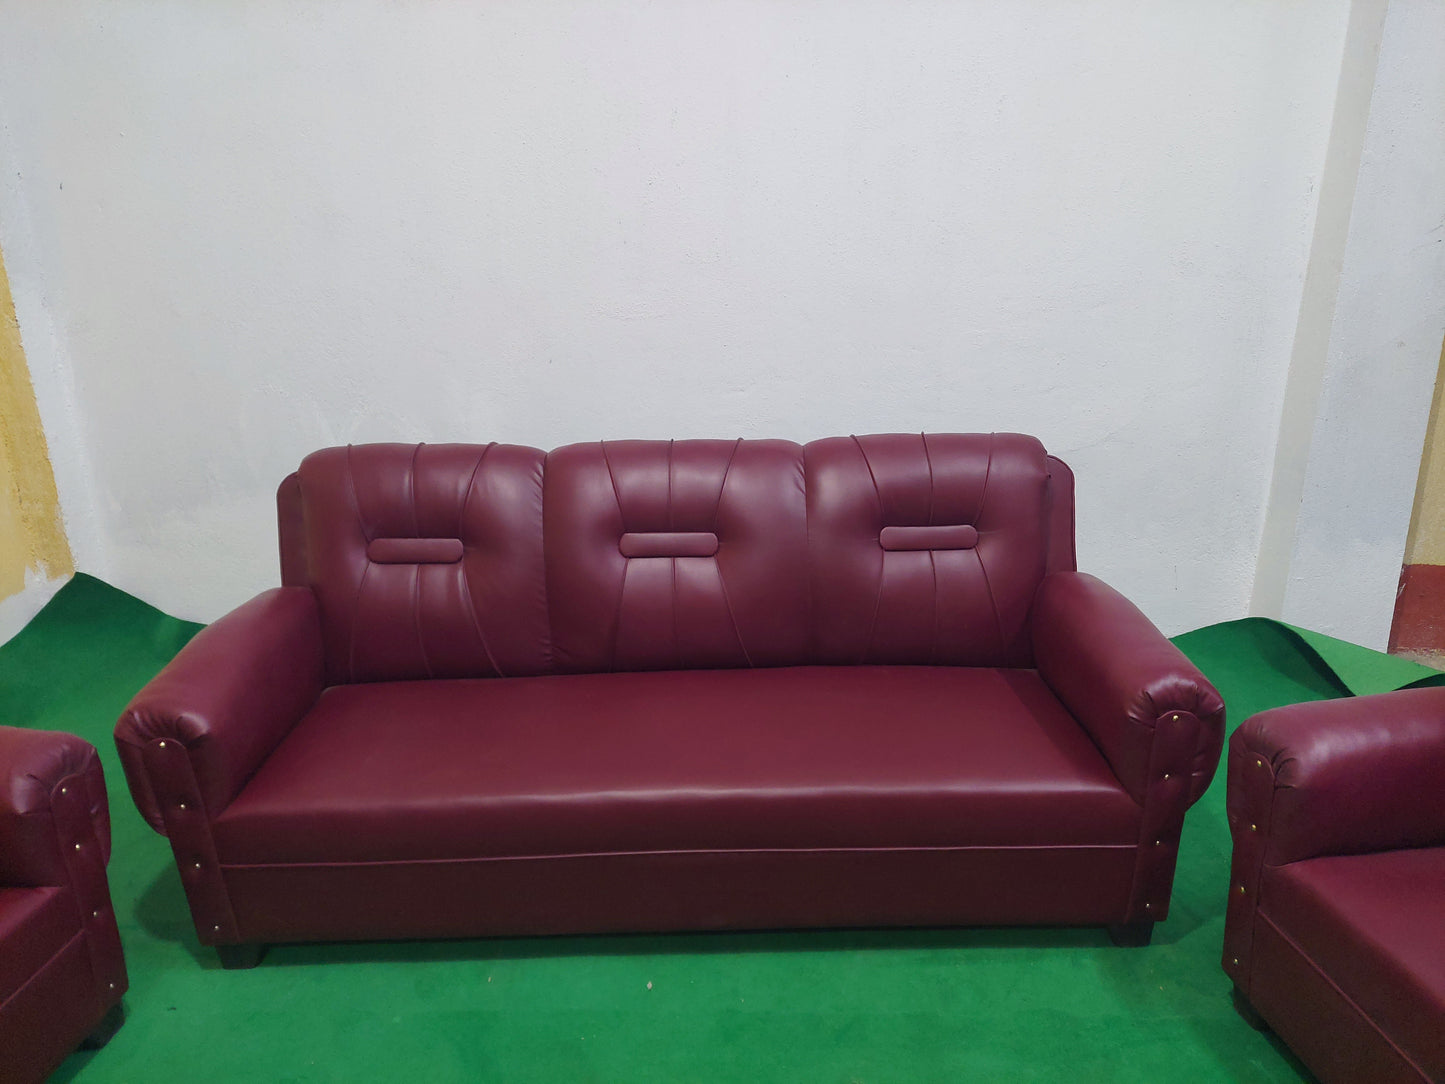 Bowzar 5 Seater Wooden Sofa Good Quality Foam Maroon